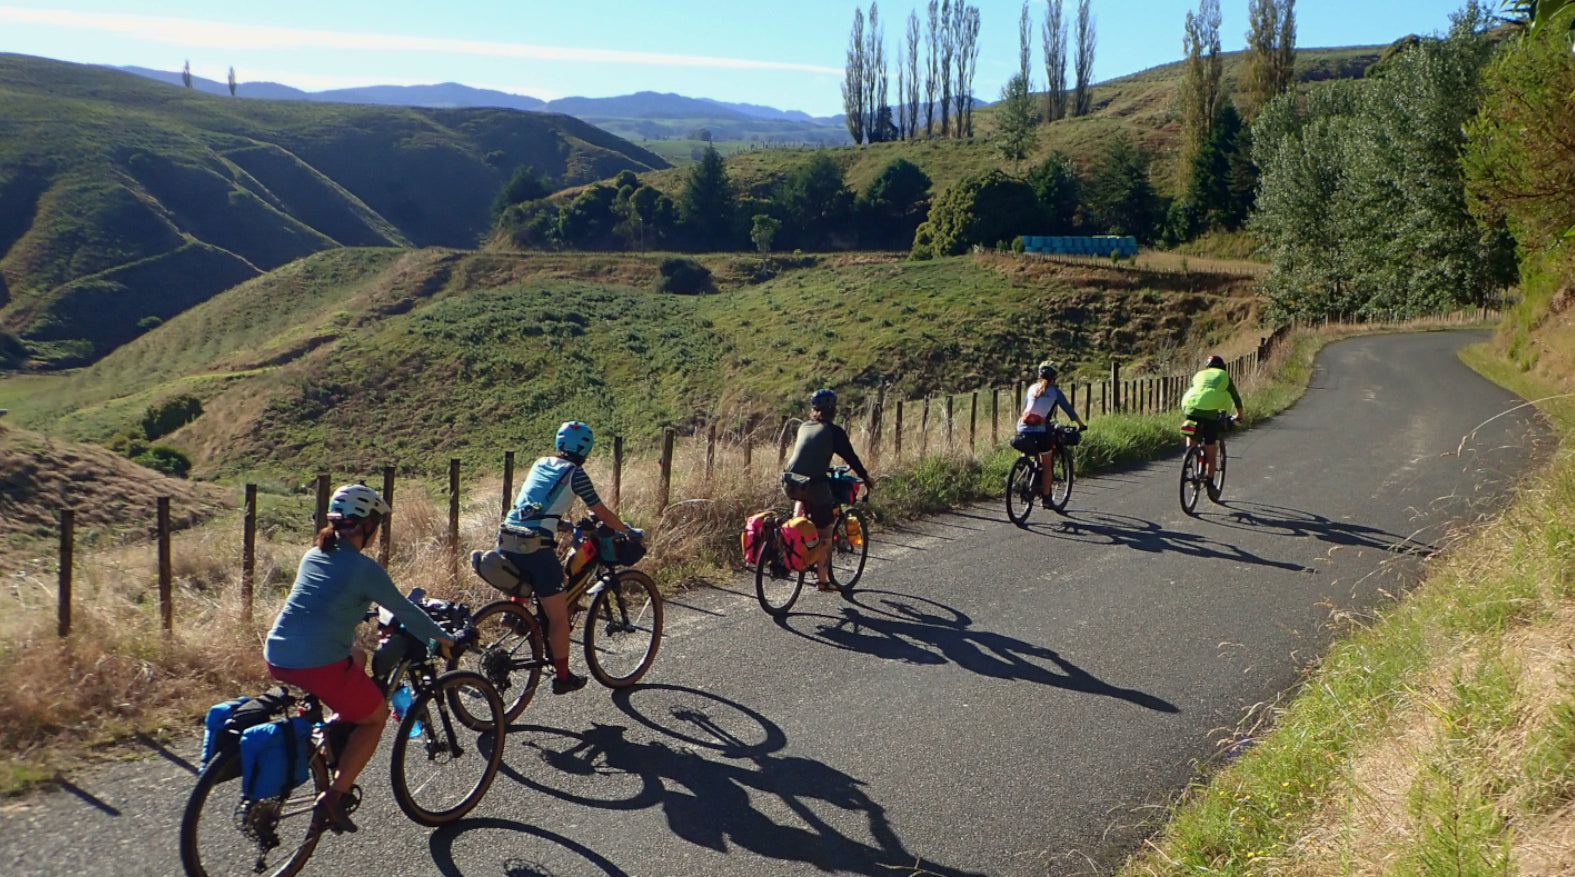 bikepacking adventures kennett brothers New Zealand Tour Aotearoa